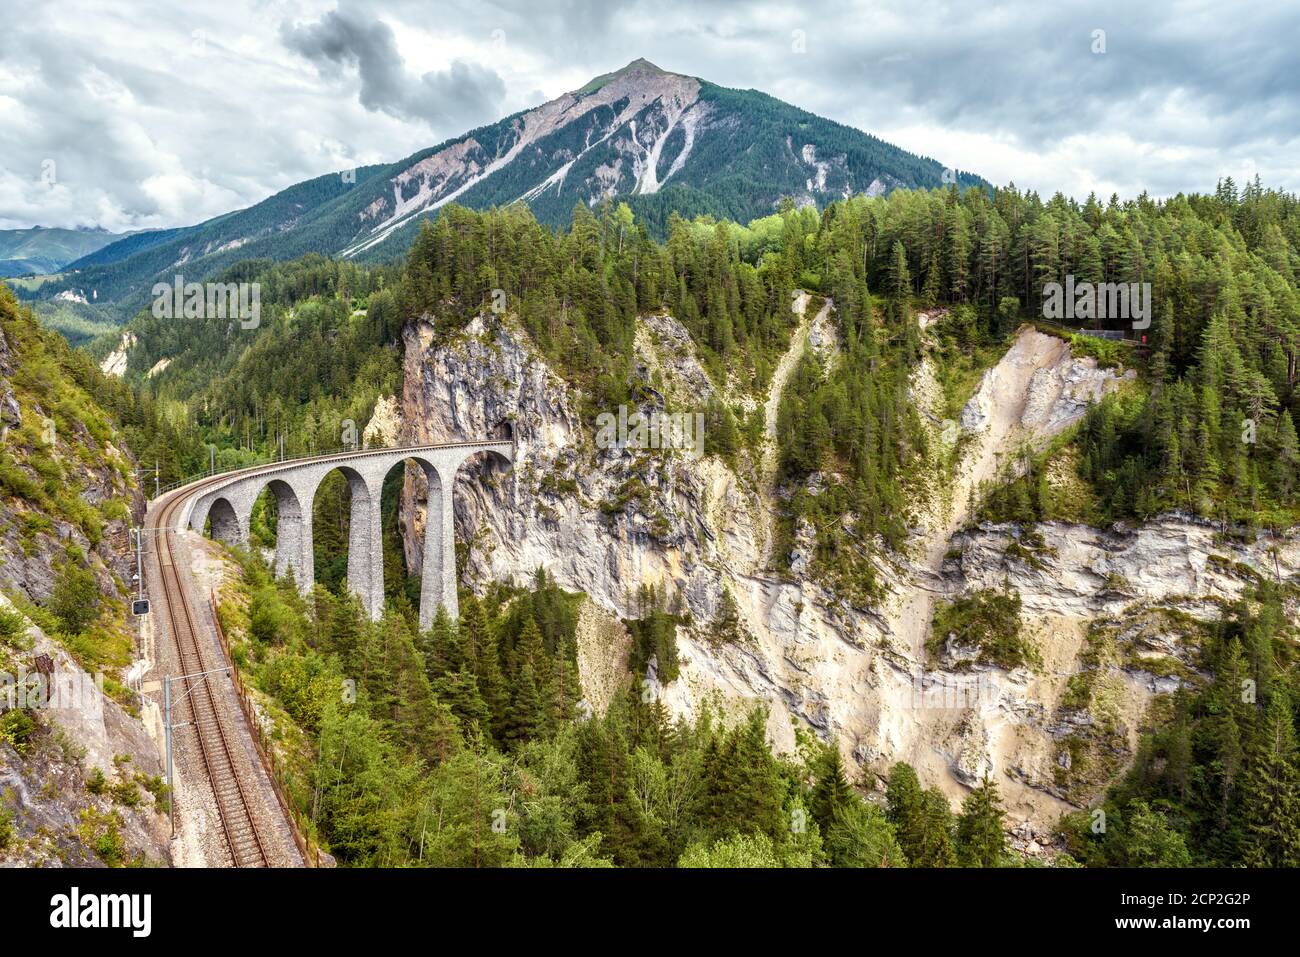 Mountain landscape with Landwasser Viaduct, Filisur, Switzerland. This place is landmark of Swiss Alps. Scenic view of high railroad bridge over gorge Stock Photo